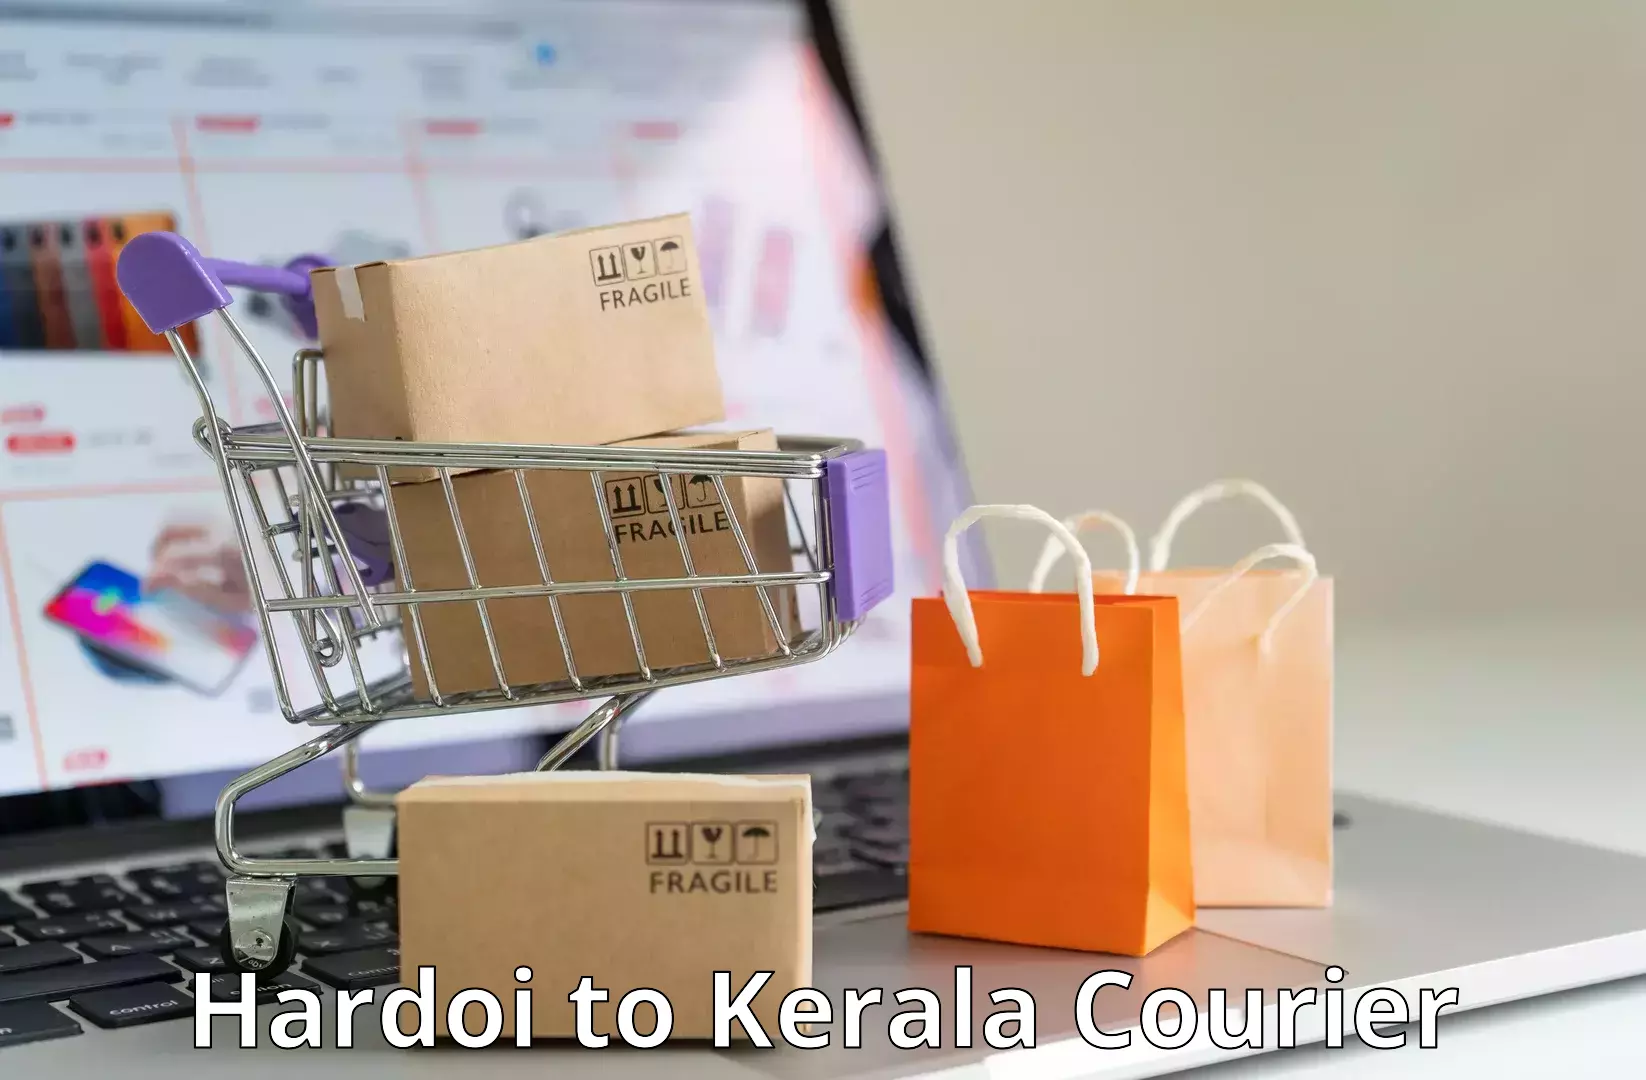 Comprehensive logistics solutions Hardoi to Trivandrum